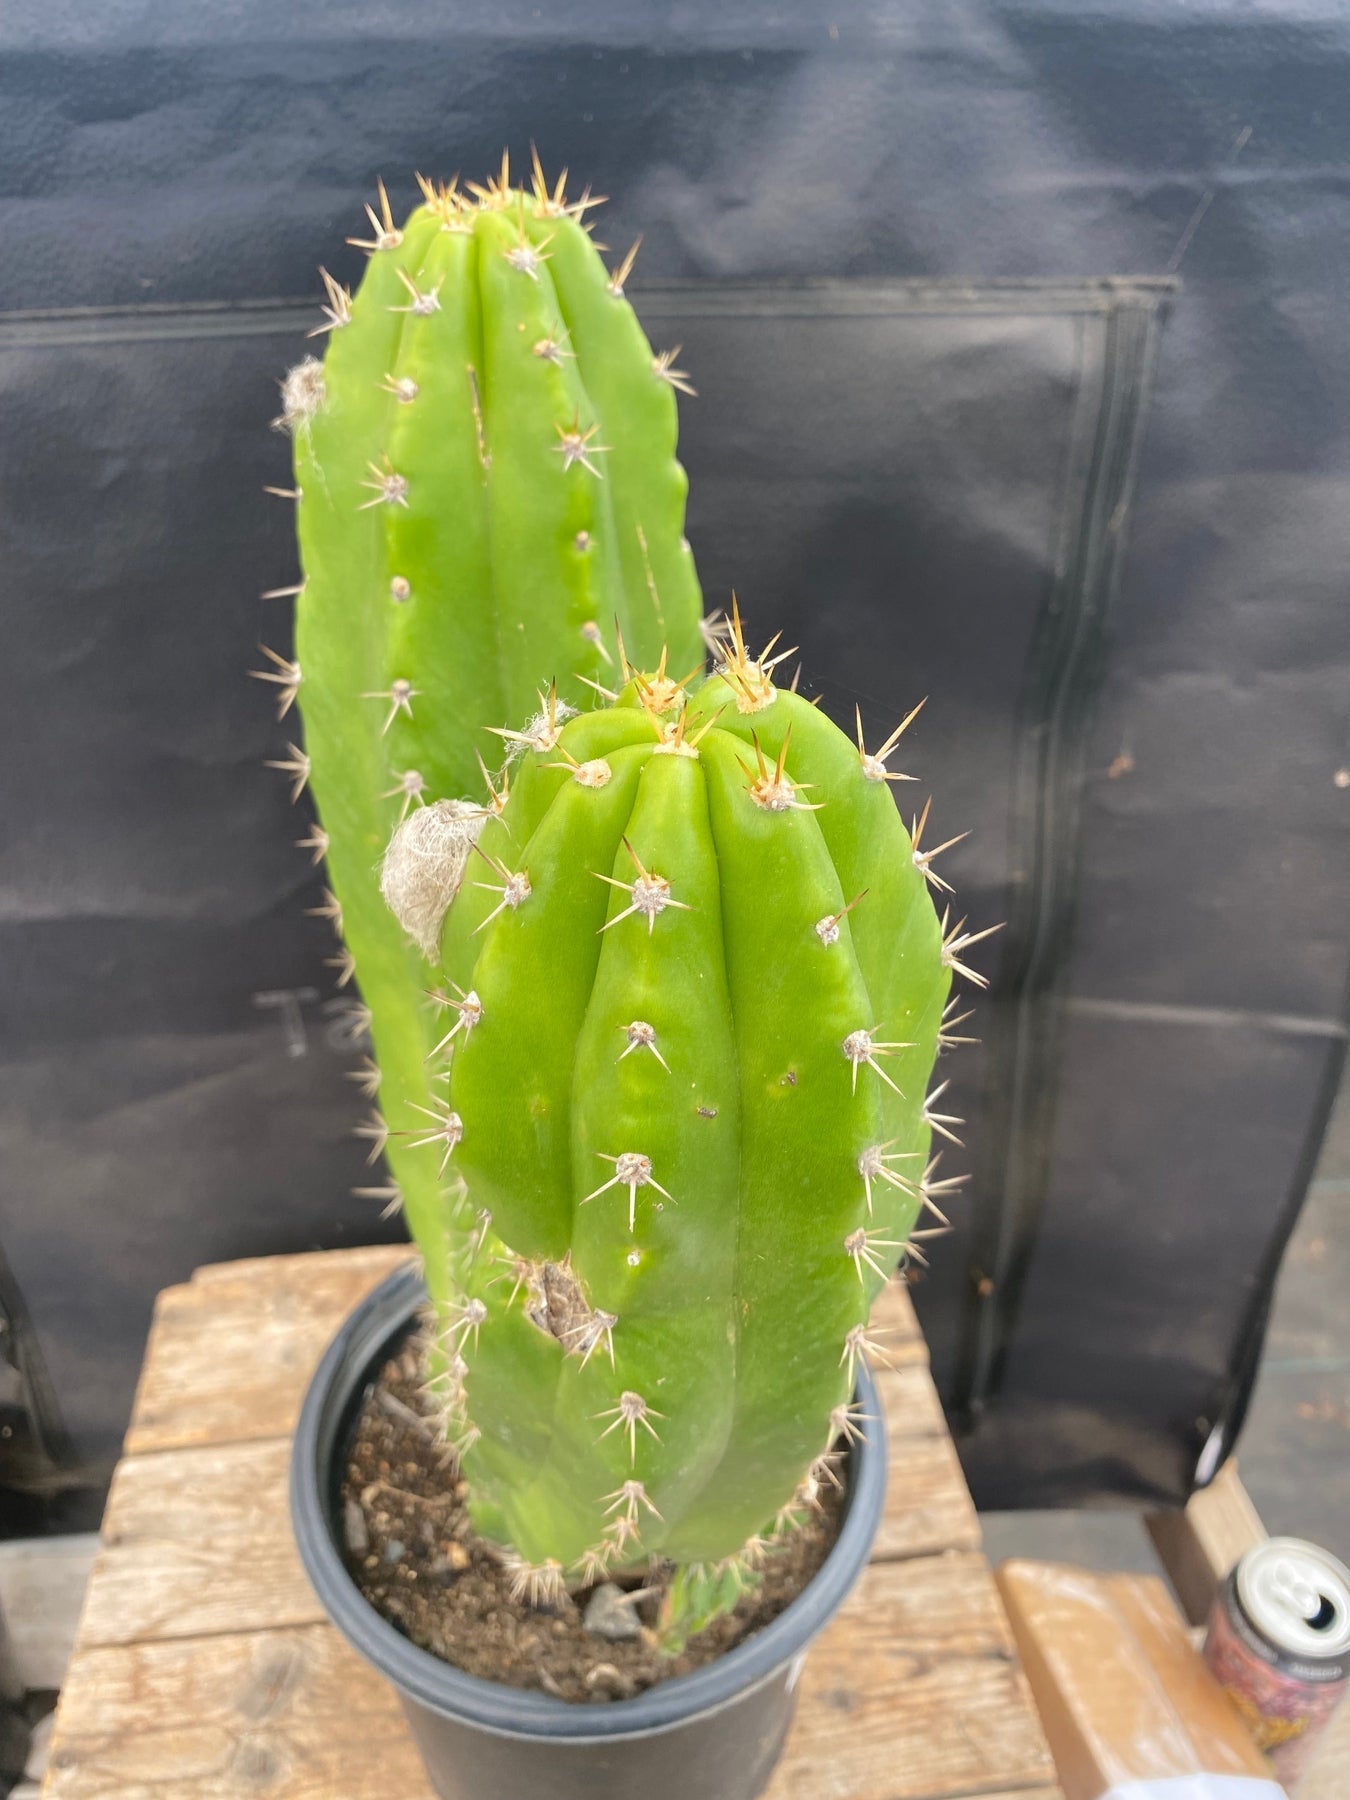 #EC129 EXACT Trichocereus Pachanoi "Jiimz Long Spine" Ornamental Cactus 13.5”-Cactus - Large - Exact-The Succulent Source